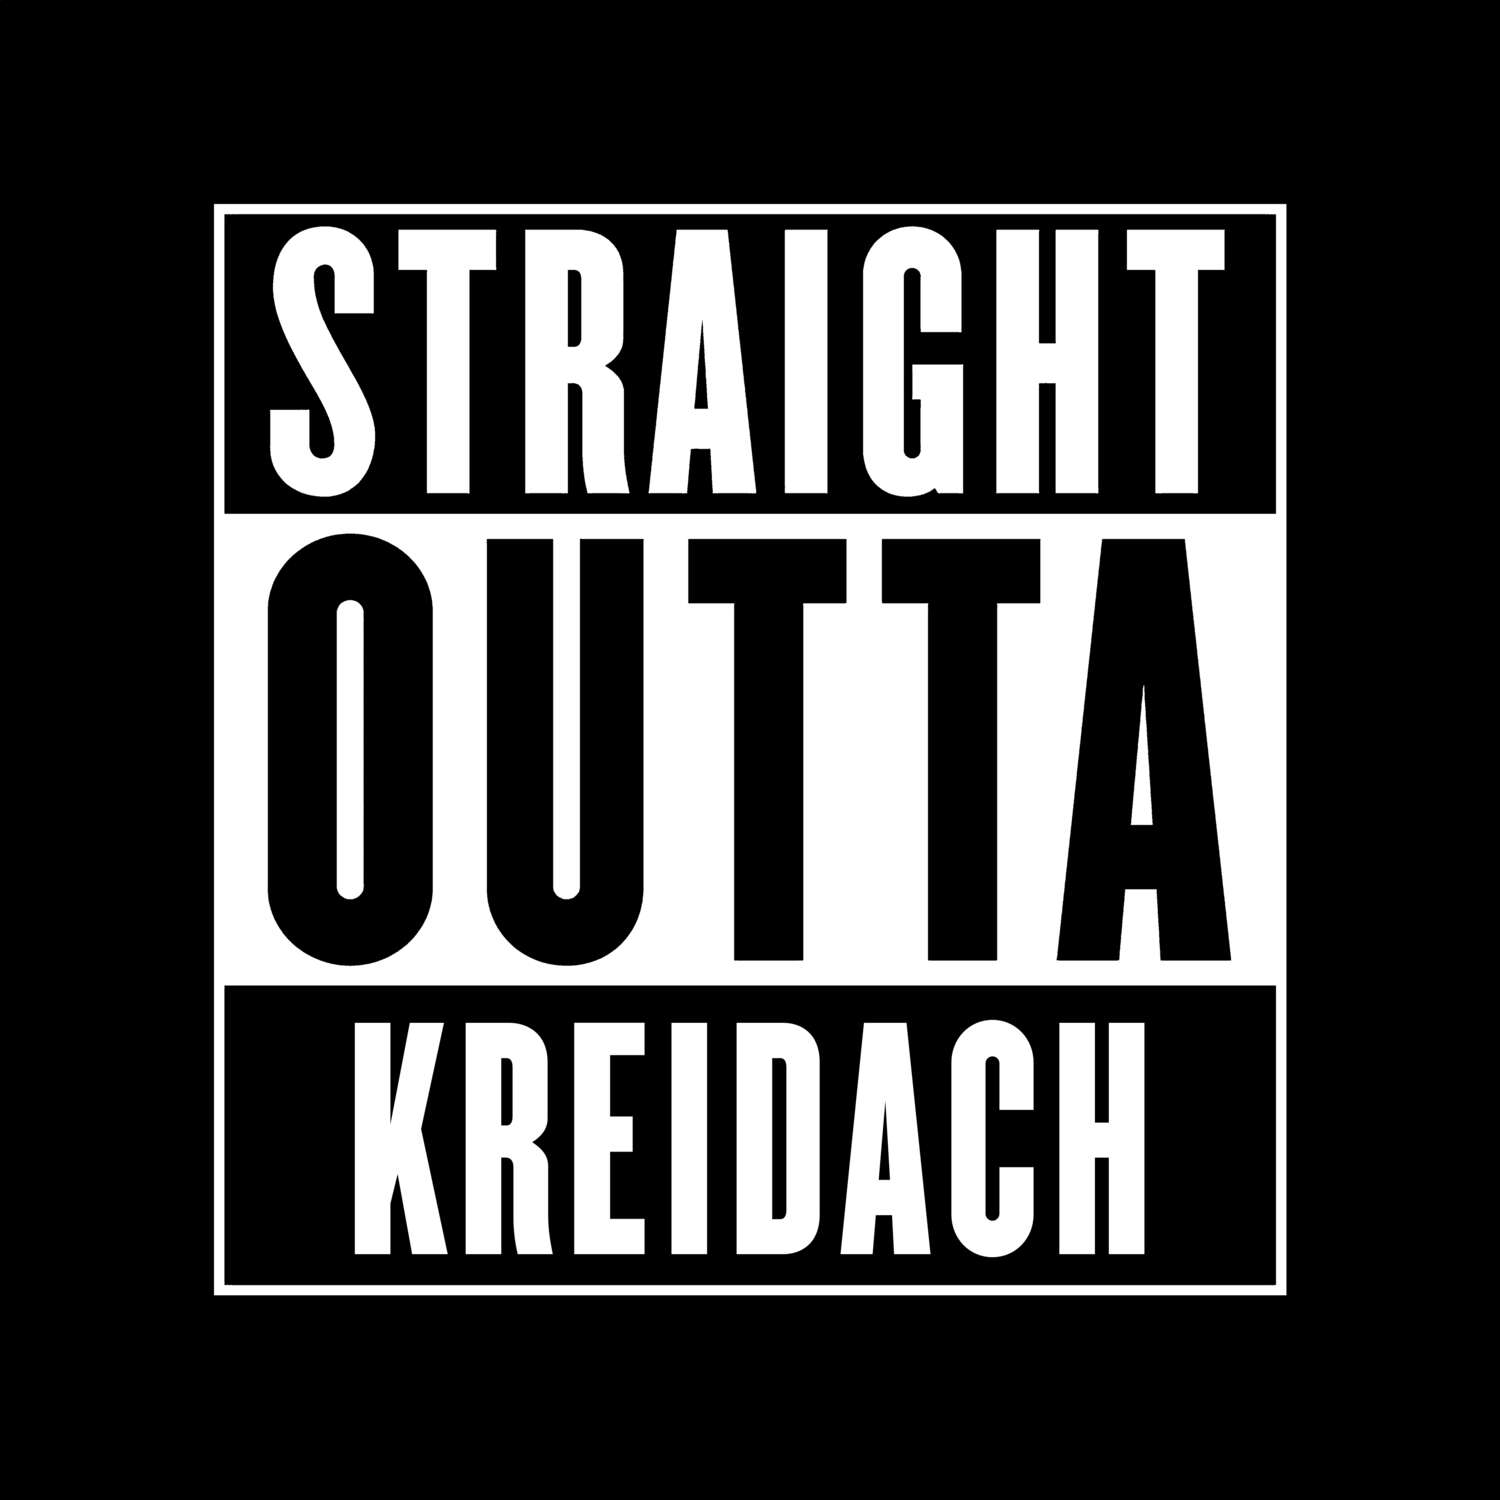 Kreidach T-Shirt »Straight Outta«